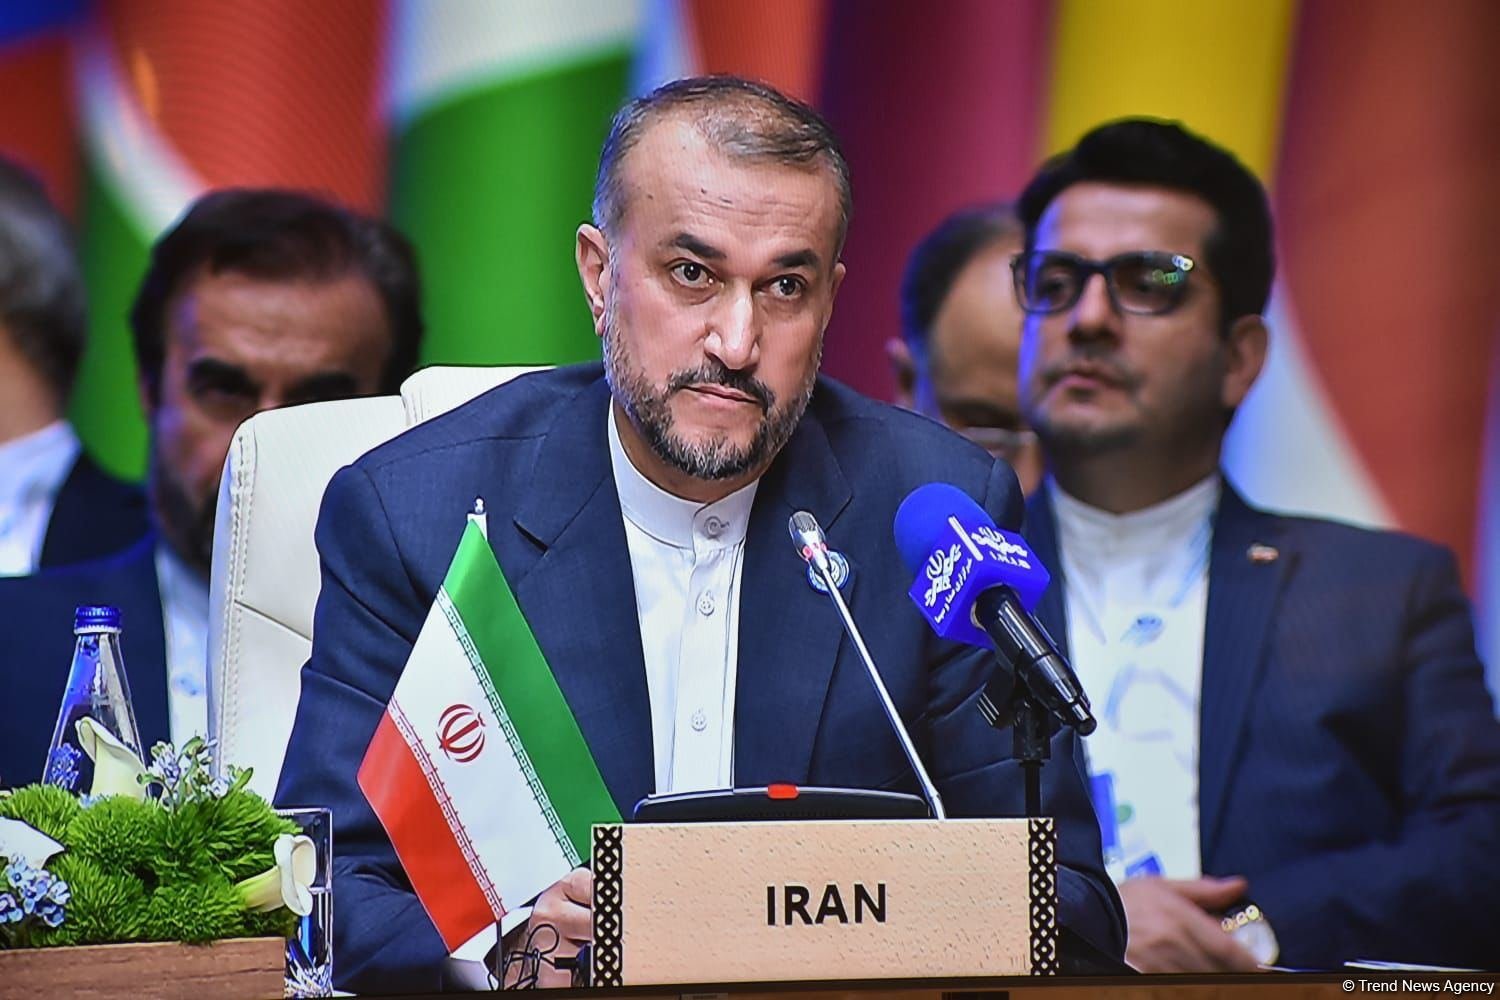 Азербайджан соблюдает трехстороннее соглашение - глава МИД Ирана